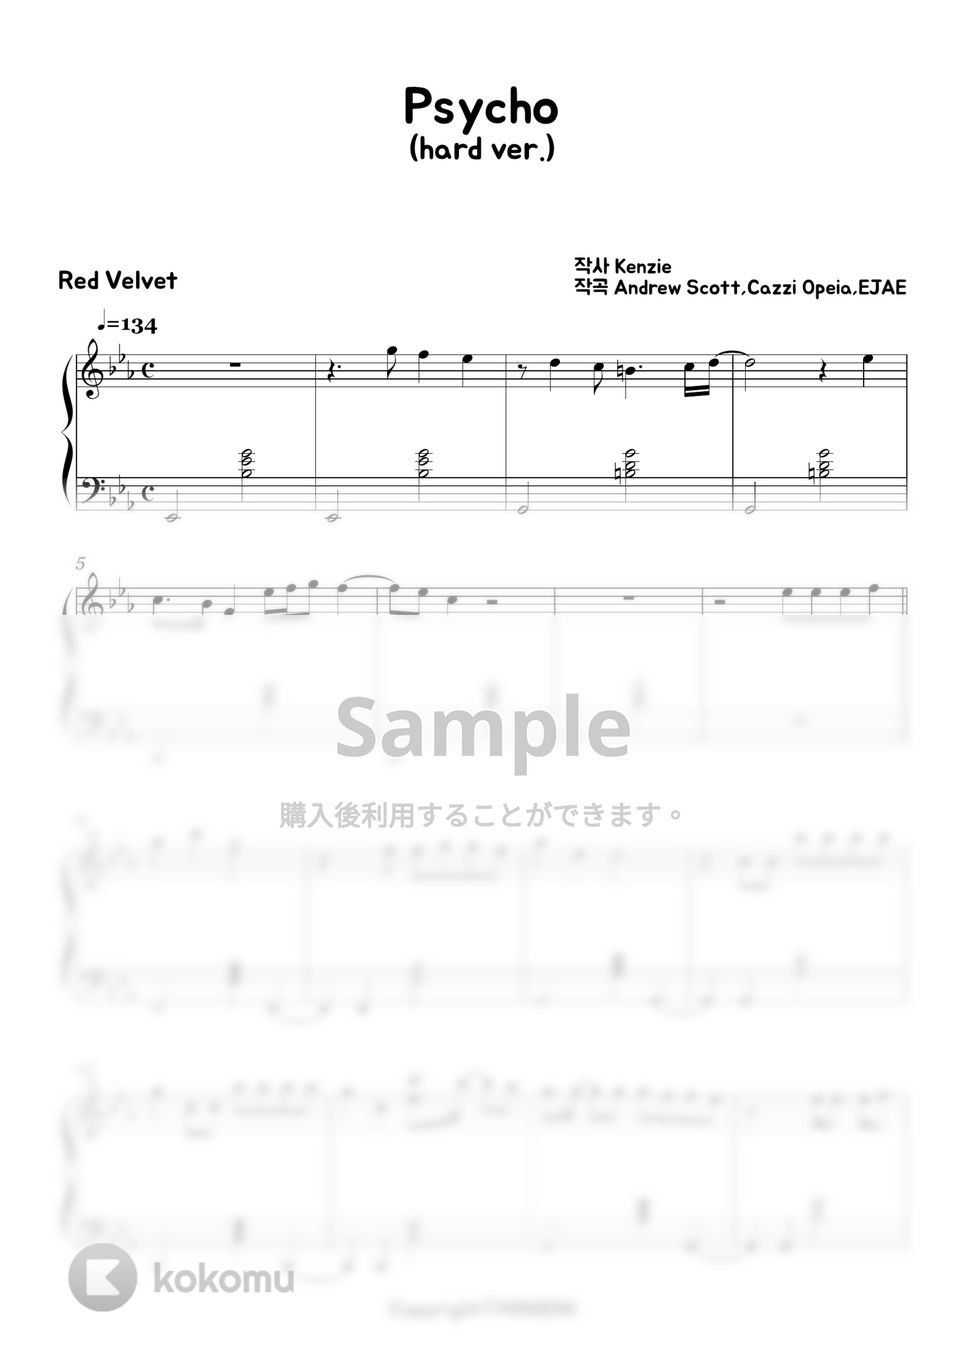 Red Velvet - PSYCHO (Hard ver.) by MINIBINI